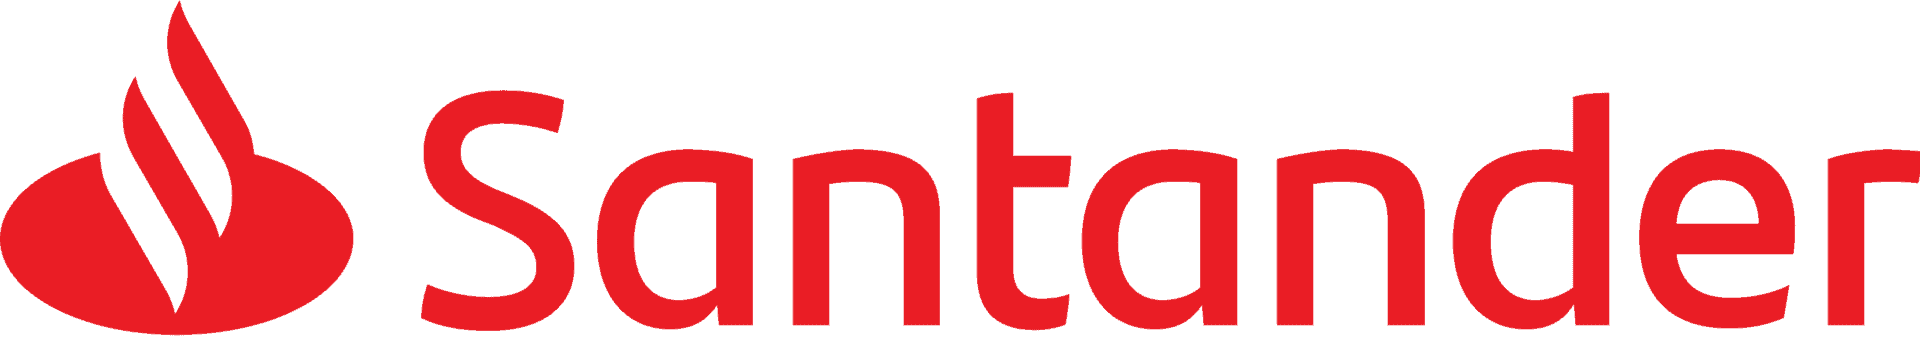 Logo do Santander para tabela